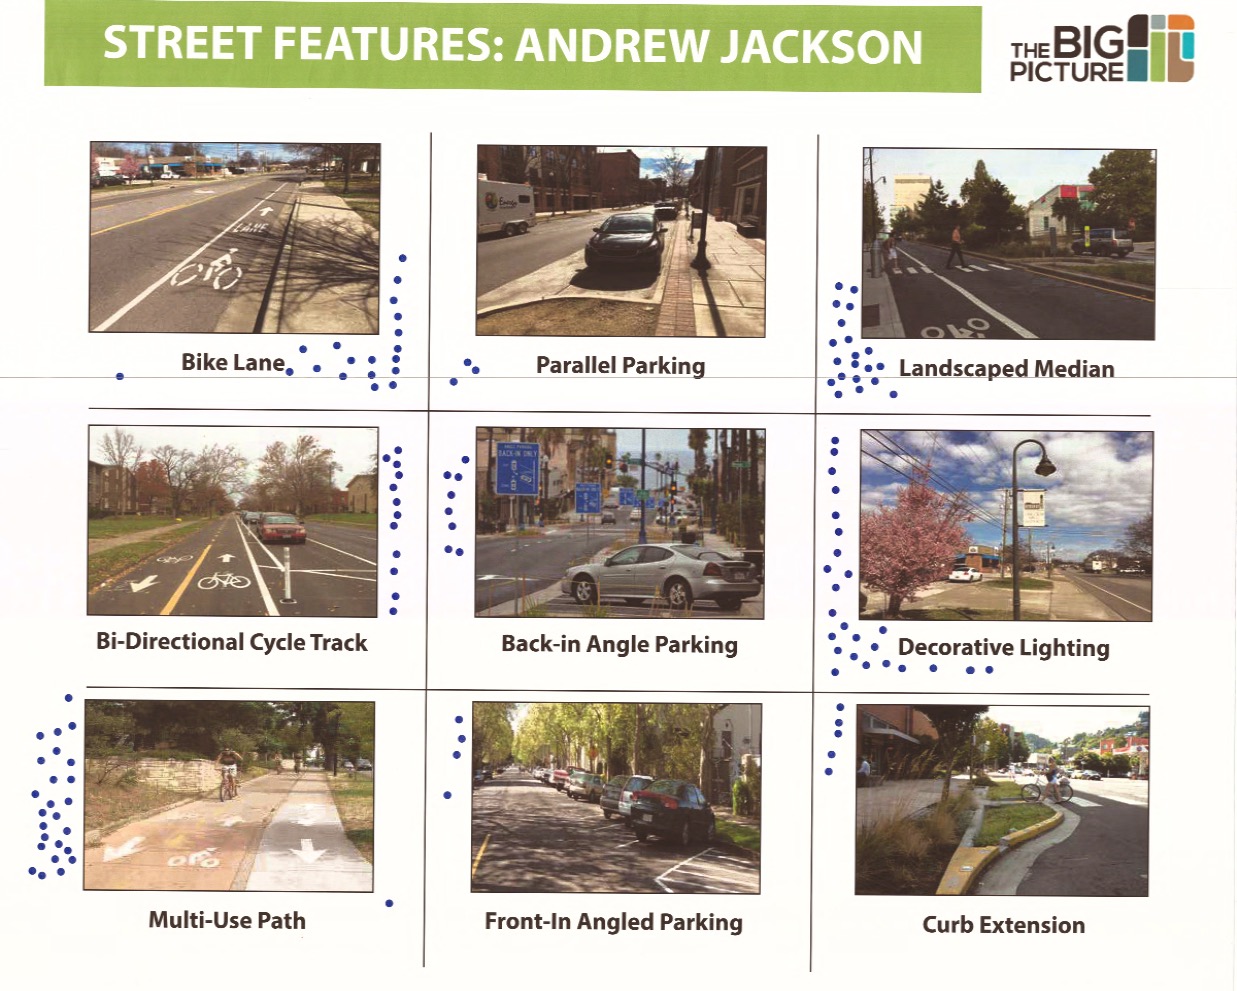 Street Features: Andrew Jackson